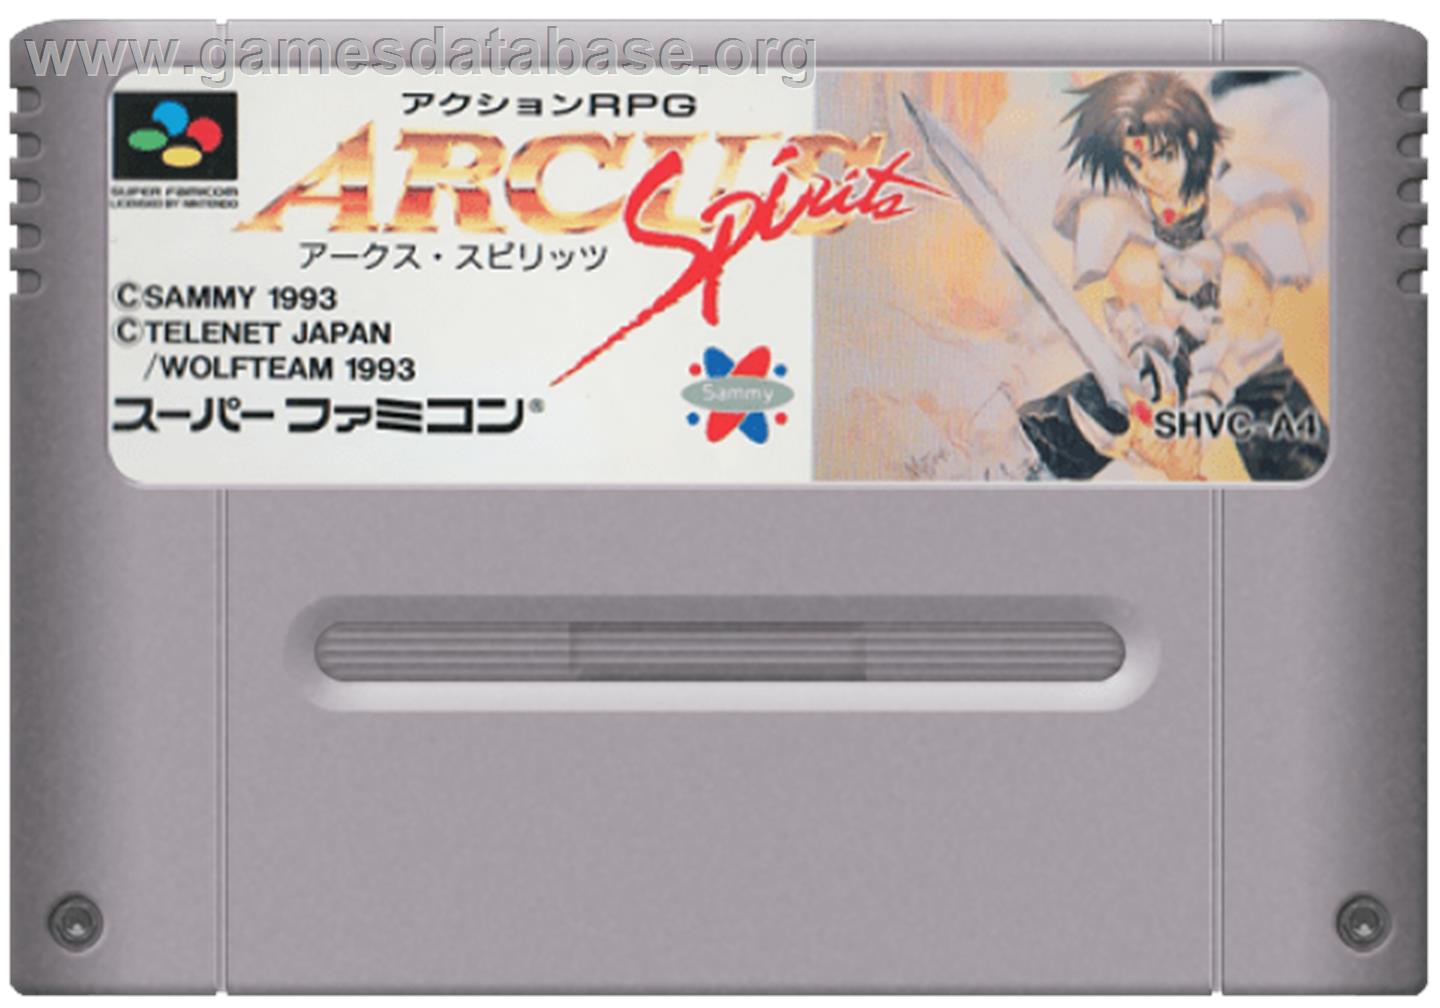 Arcus Spirits - Nintendo SNES - Artwork - Cartridge